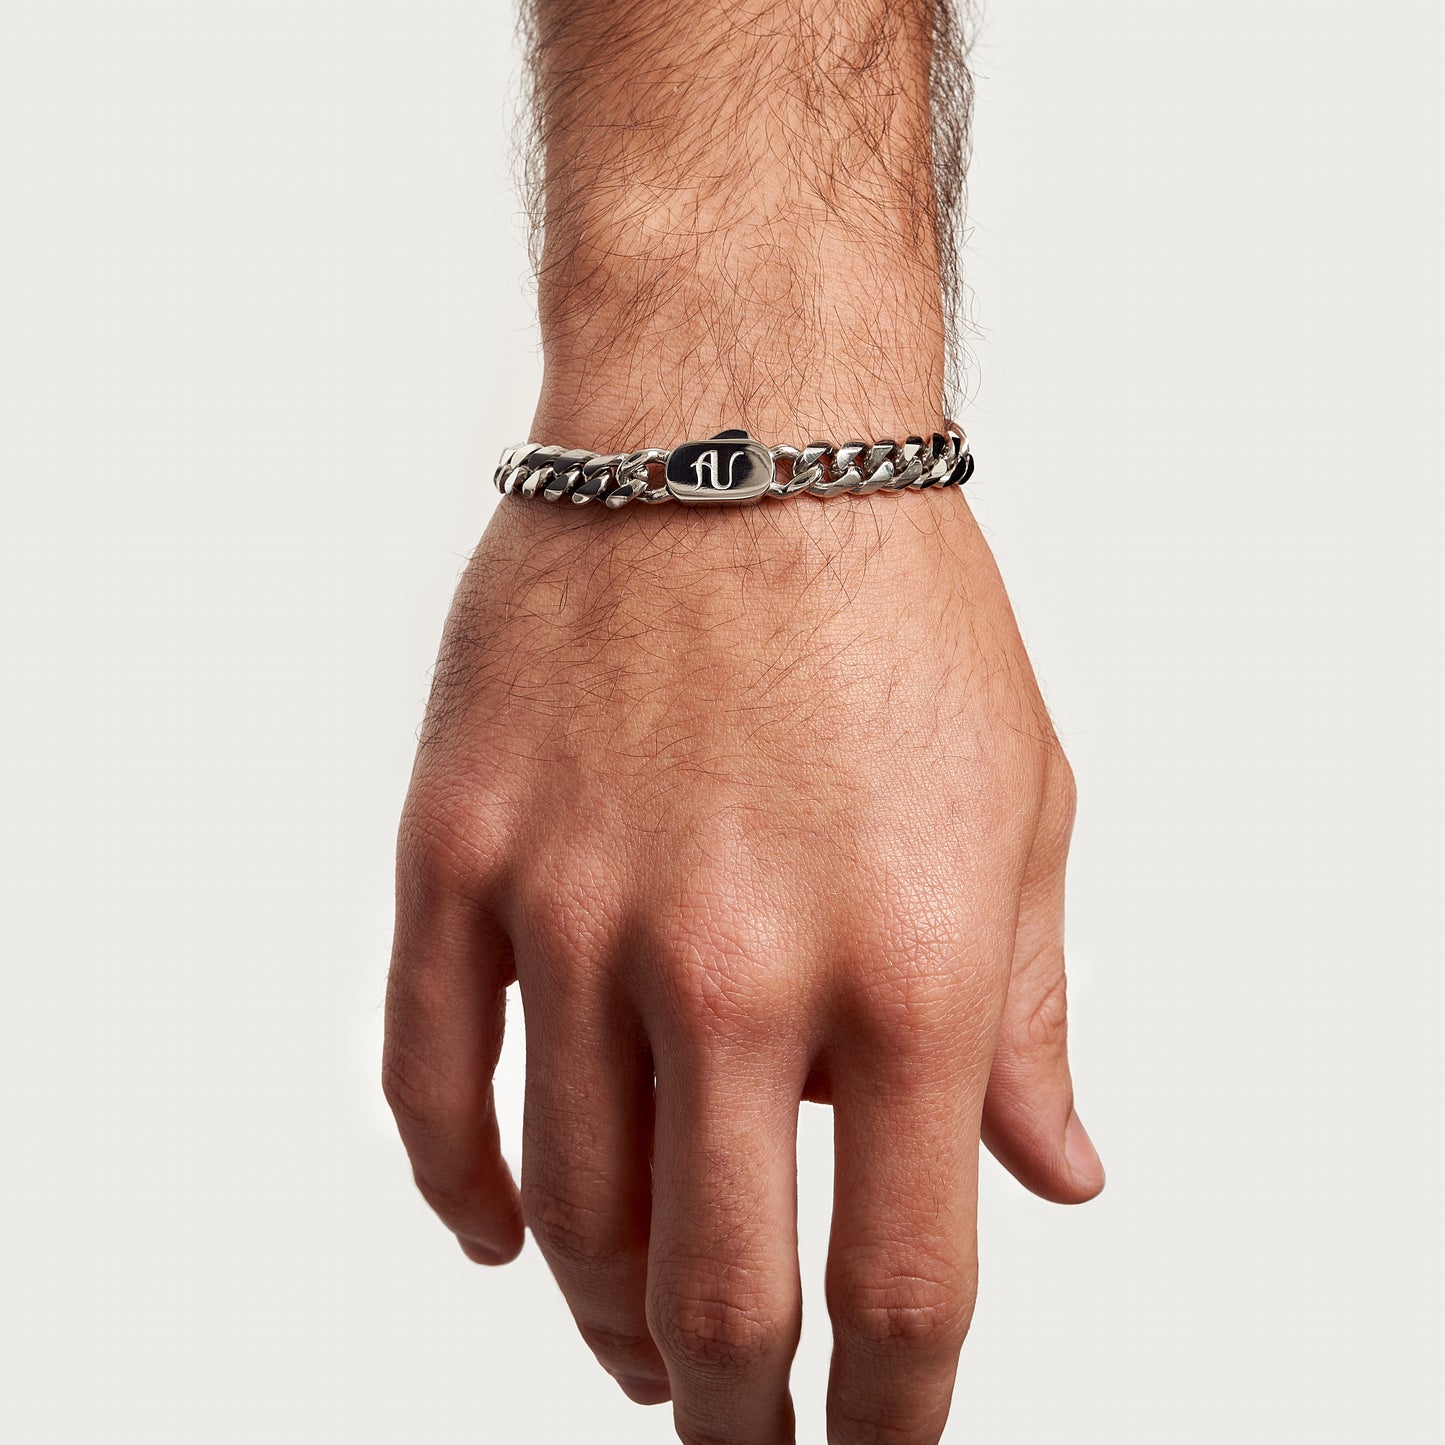 Silver Bracelet for Men mens silver bracelet